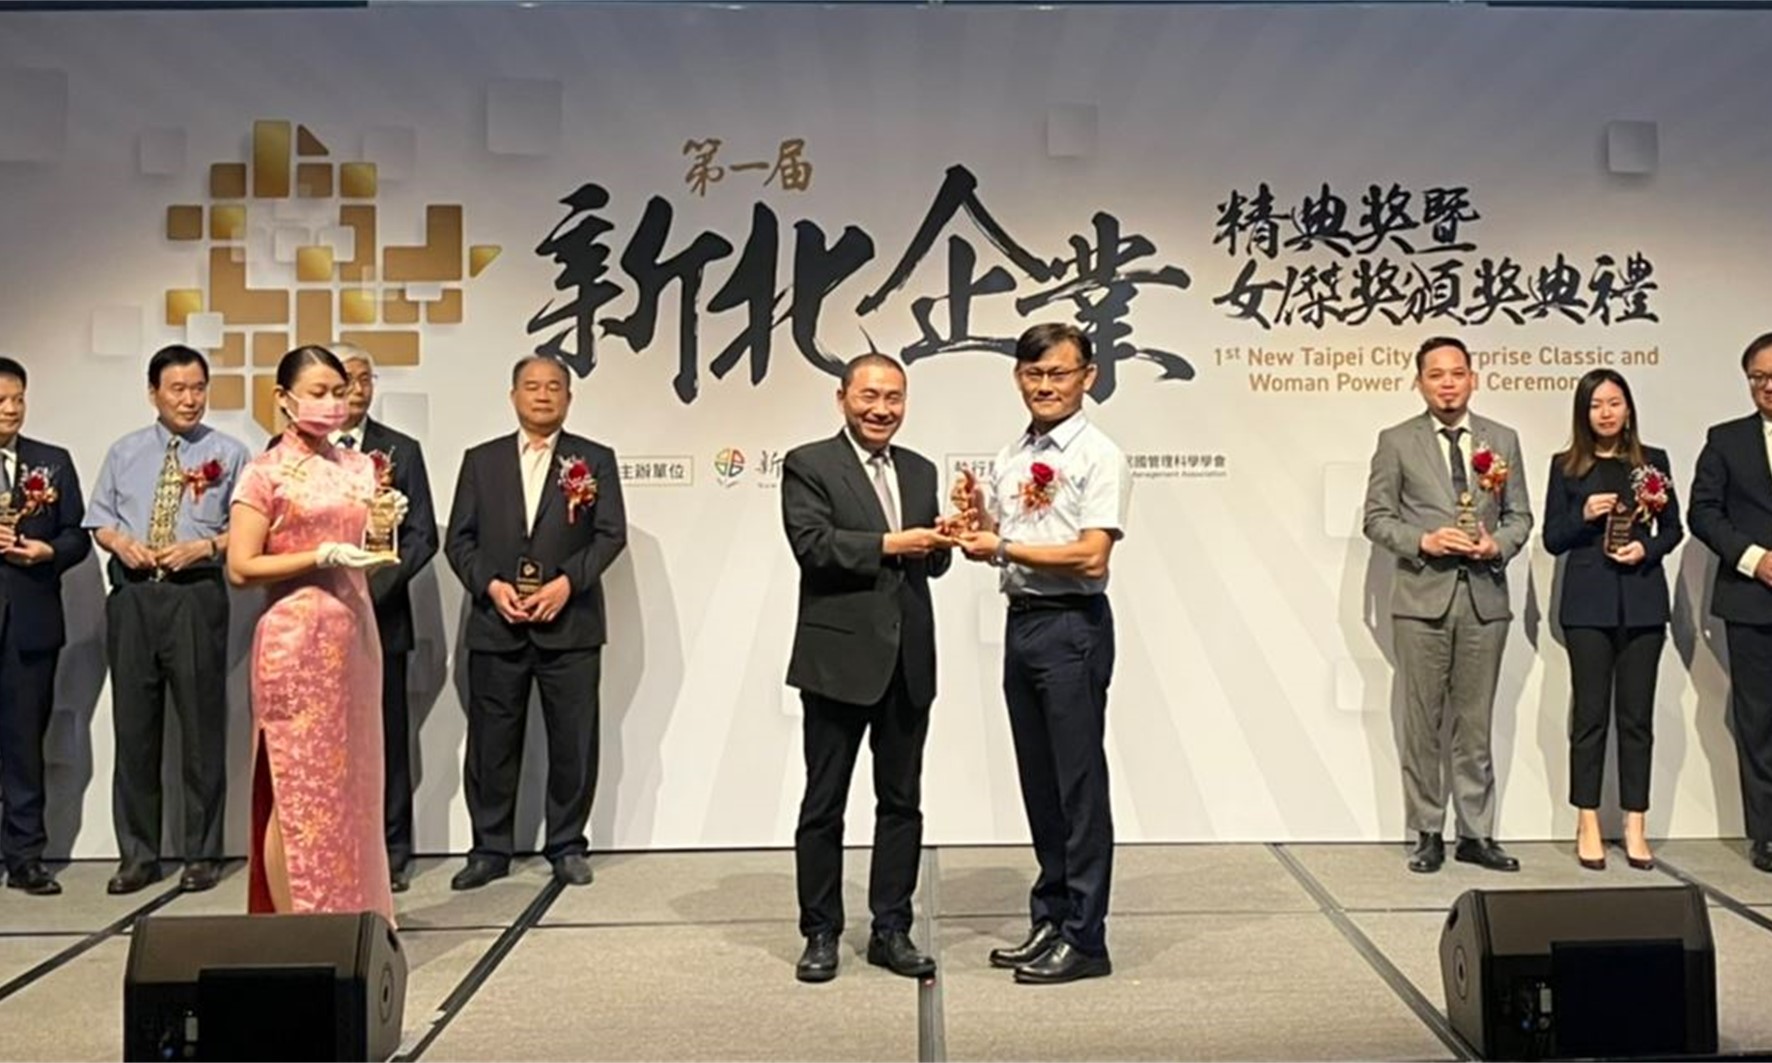 BiOptic Inc. won the honor of “New Taipei City Enterprise Classic Award”